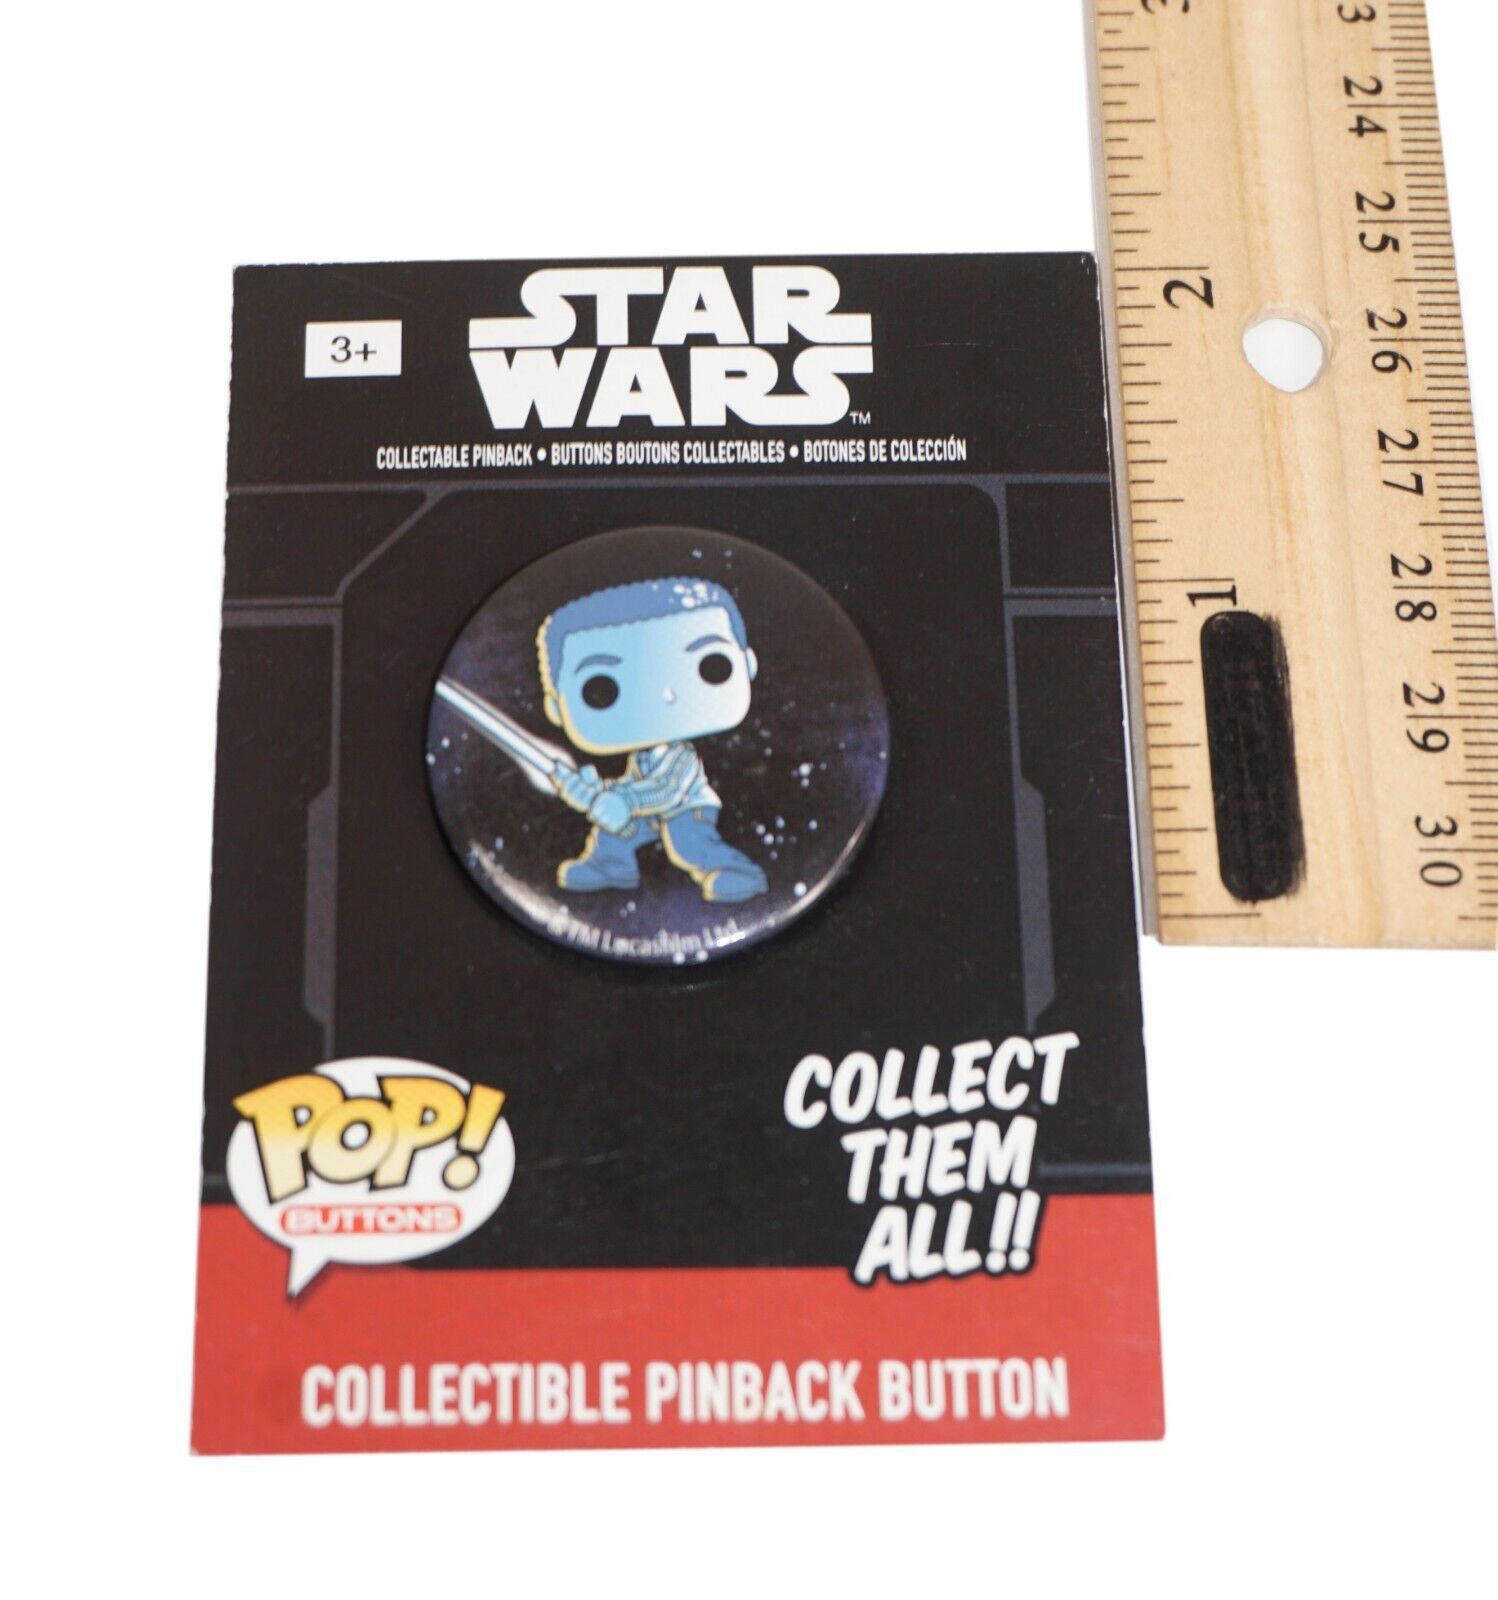 Star Wars Finn Funko Collectible - Disney Pinback 1.25" Button Pin 2016 - $5.00